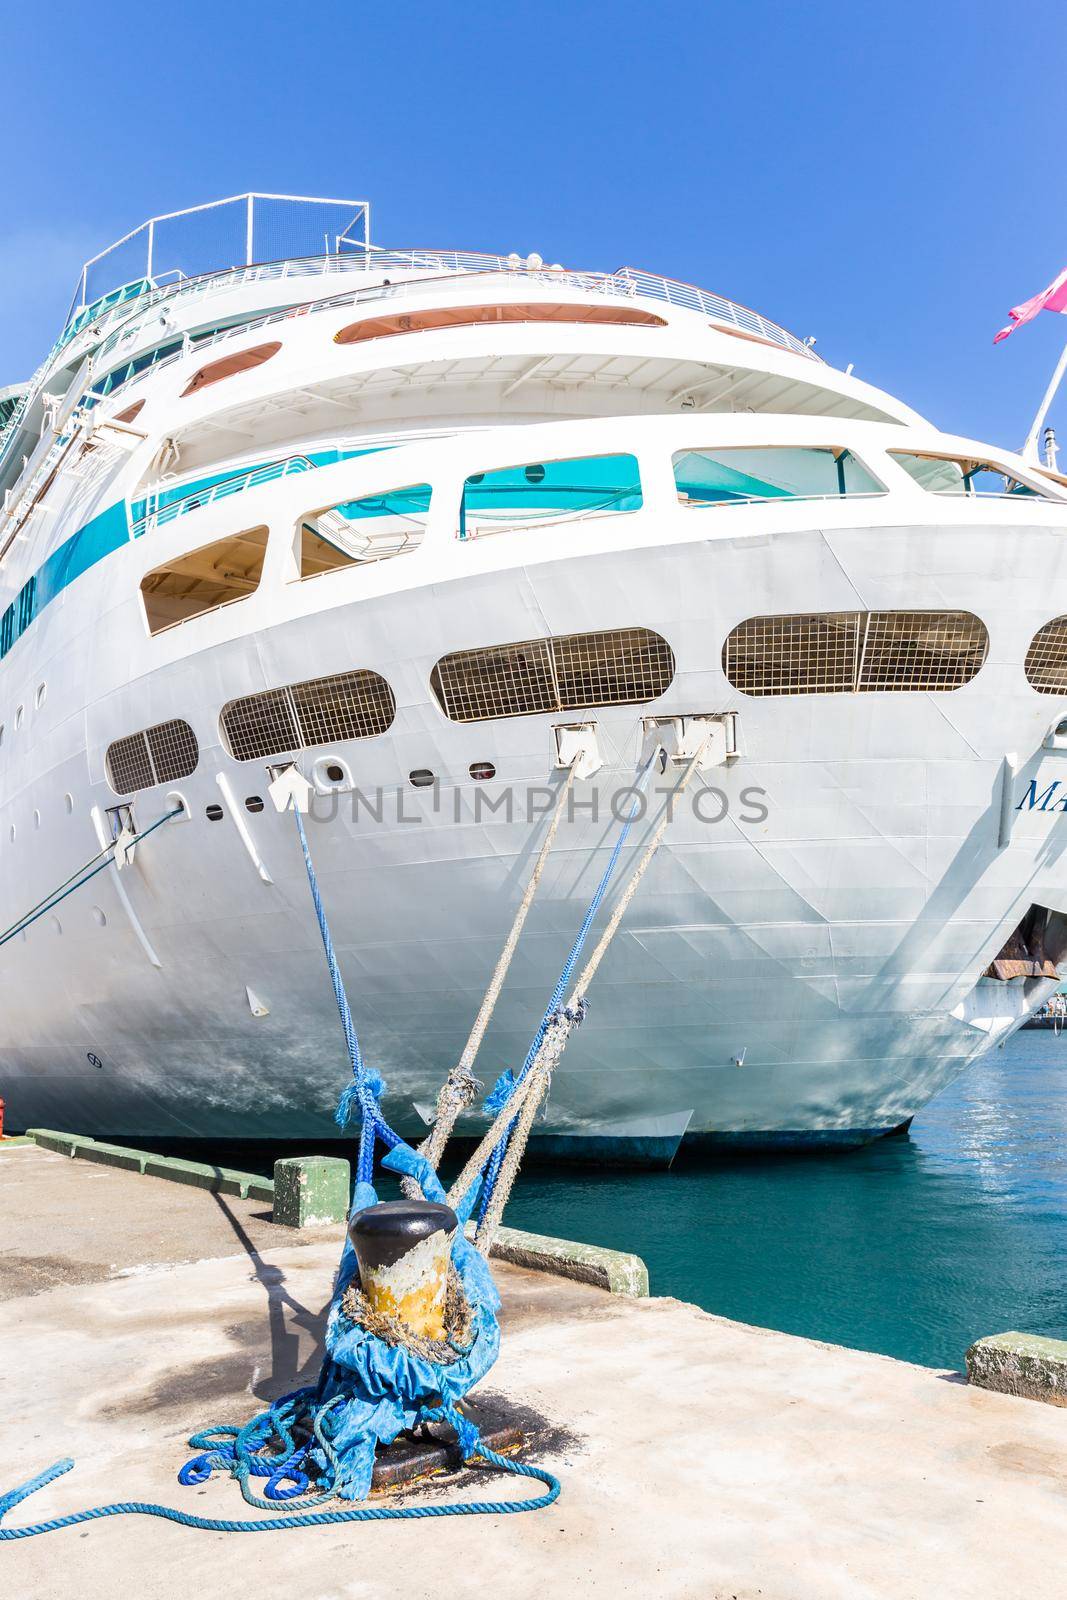 NASSAU, BAHAMAS - SEPTEMBER, 06, 2014: Royal Caribbean's ship, Majesty of the Seas in the Port of the Bahamas on September 06, 2014